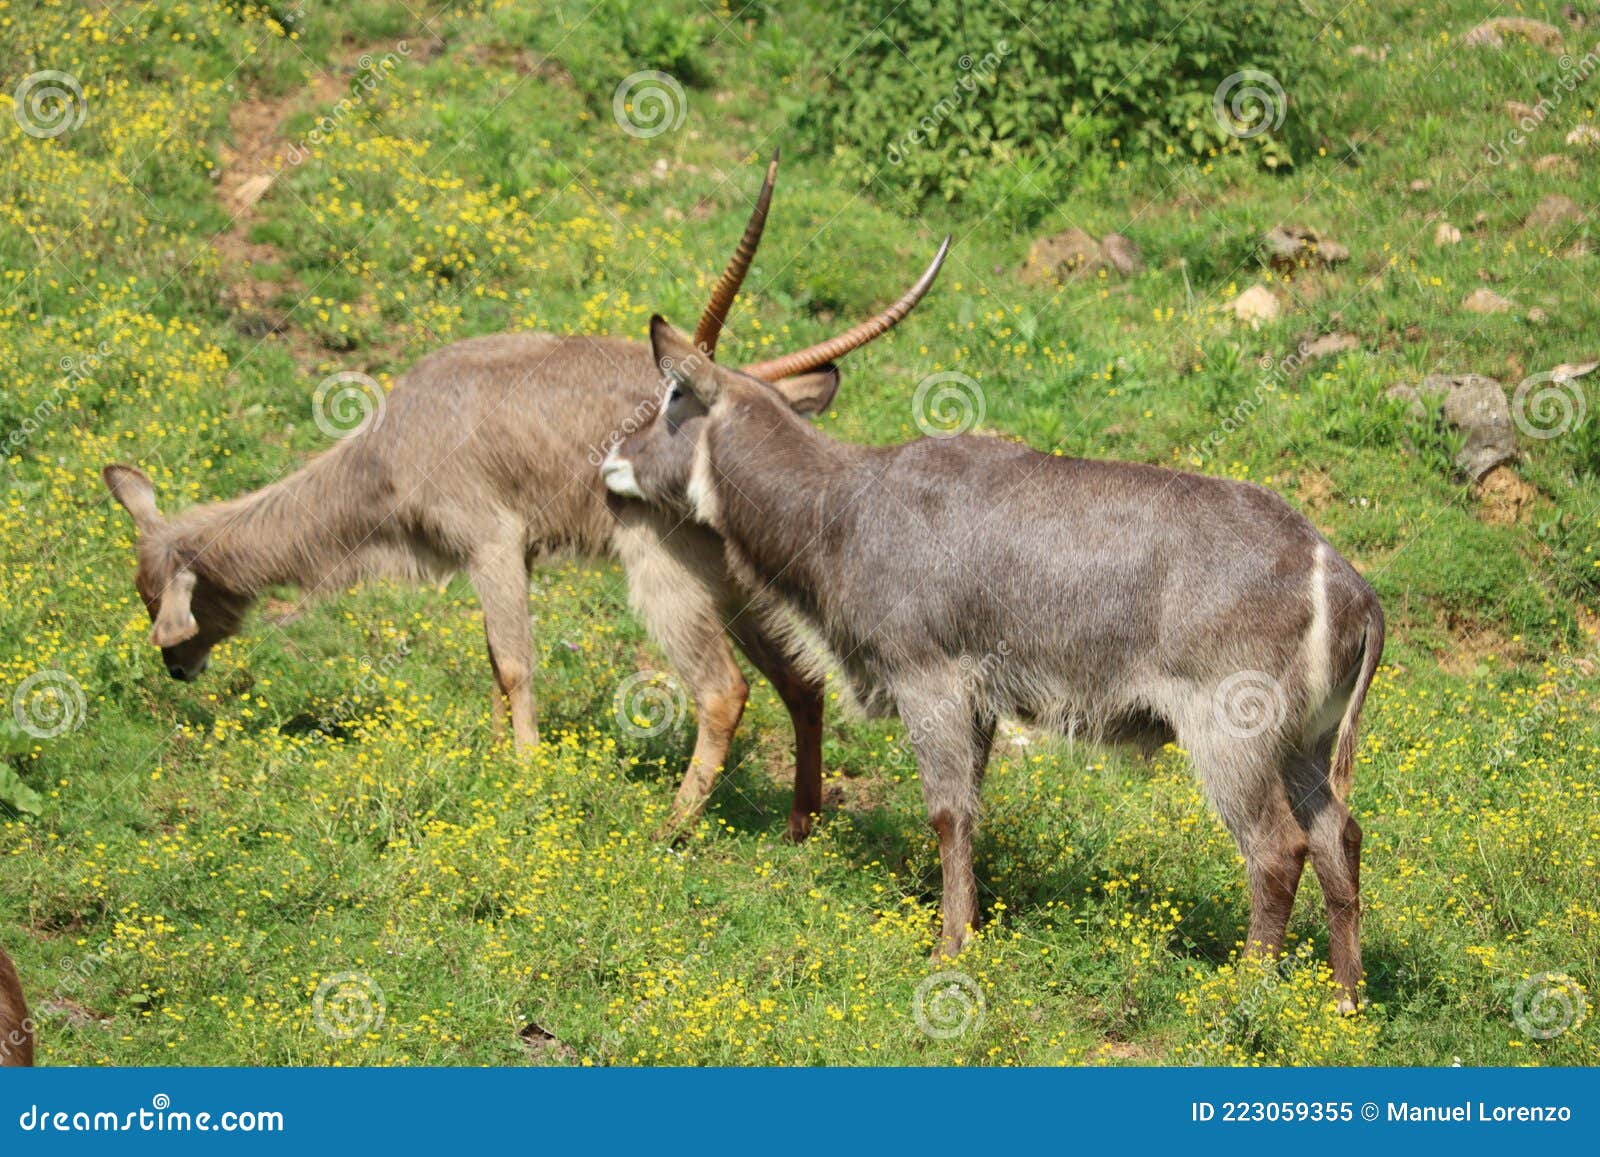 beautiful wild animals boiling horns safari antelopes gazelles